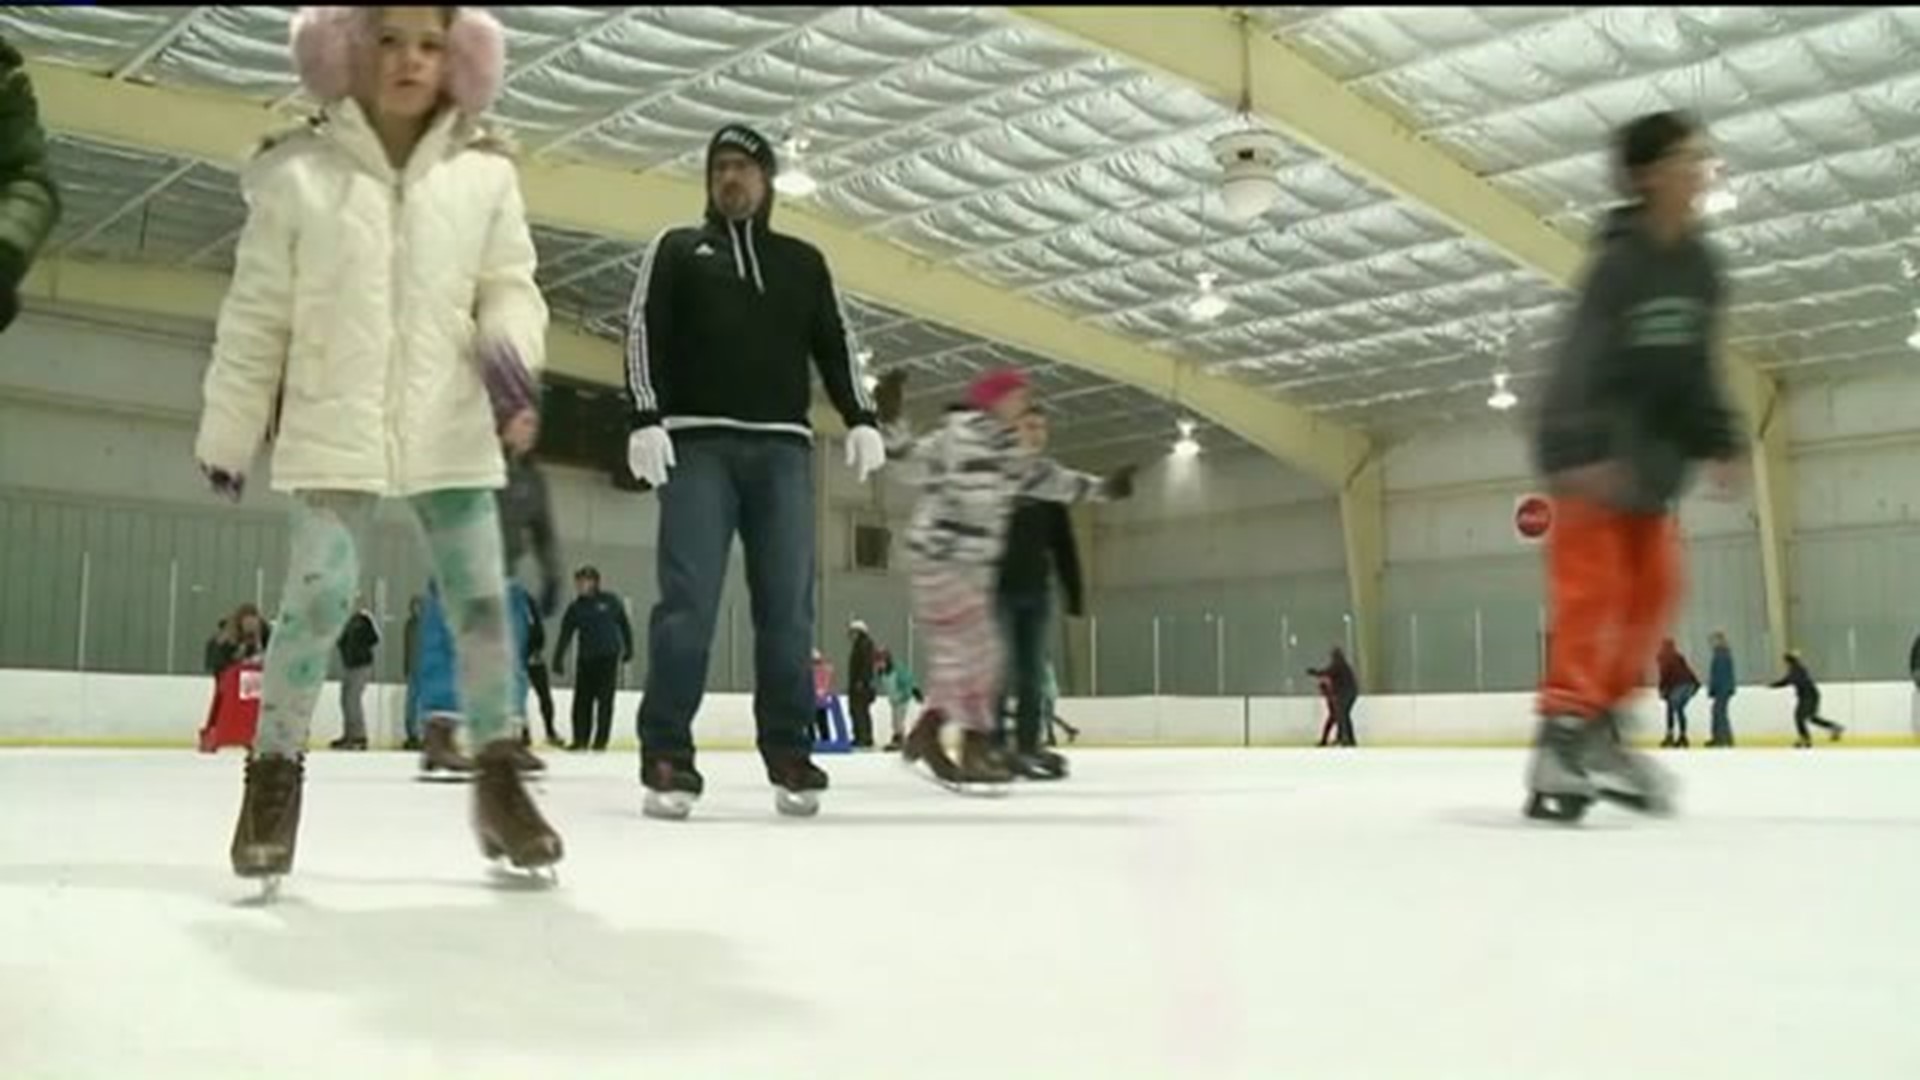 Indoor Ice Skating Rink a Popular Spot in Sunbury